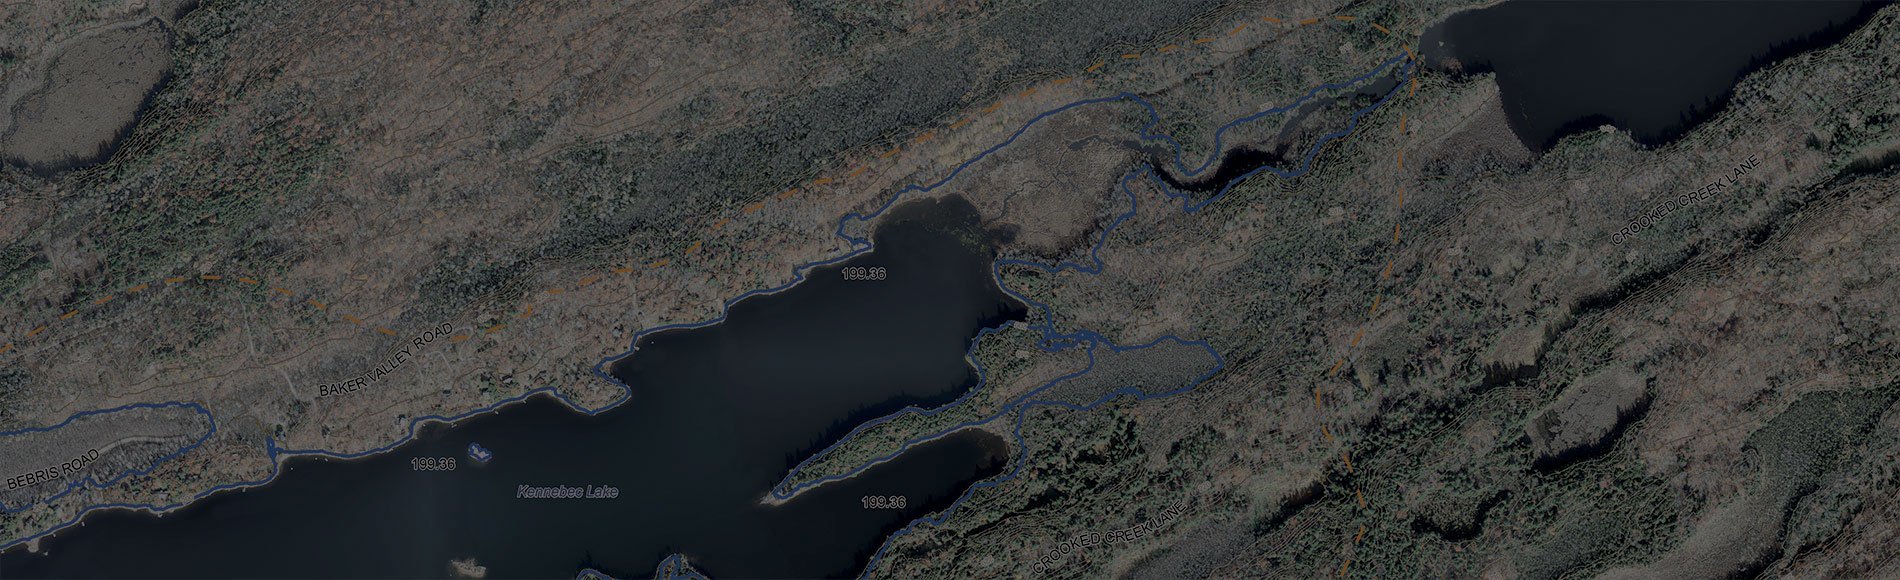 Salmon River Upper Lakes flood plain mapping